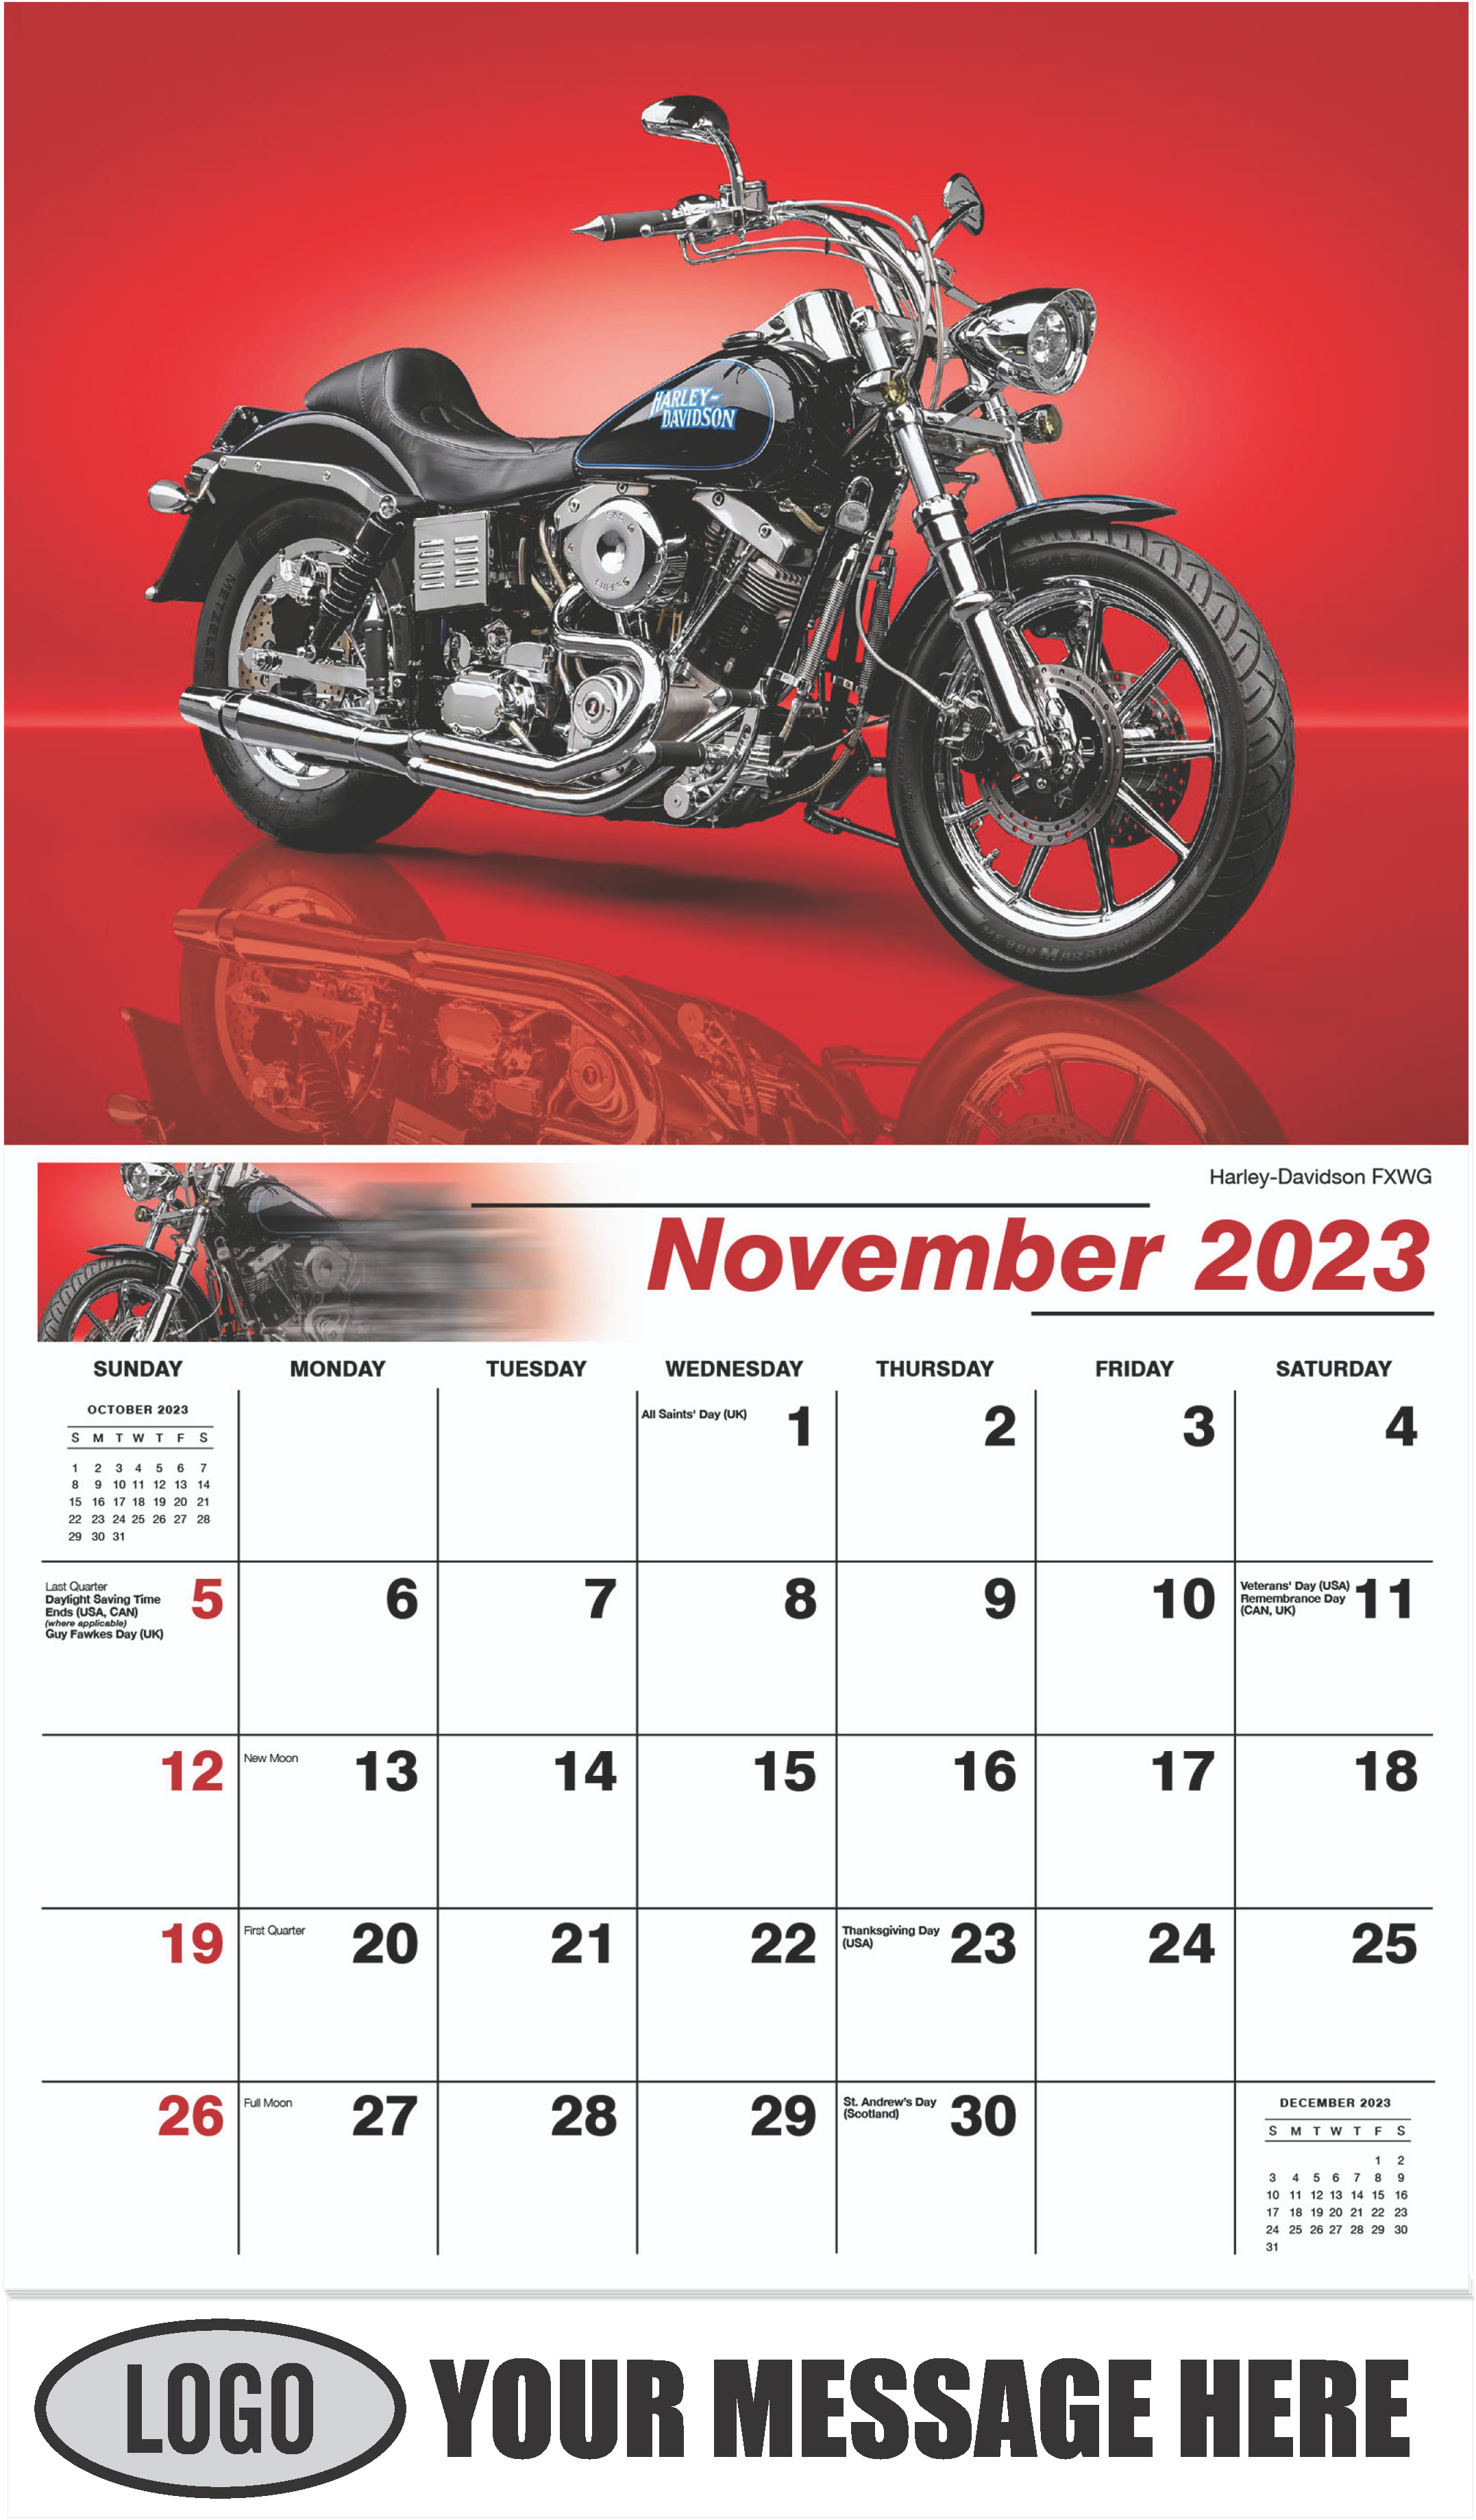 Harley-Davidson FXWG - November - Motorcycle Mania 2023 Promotional Calendar